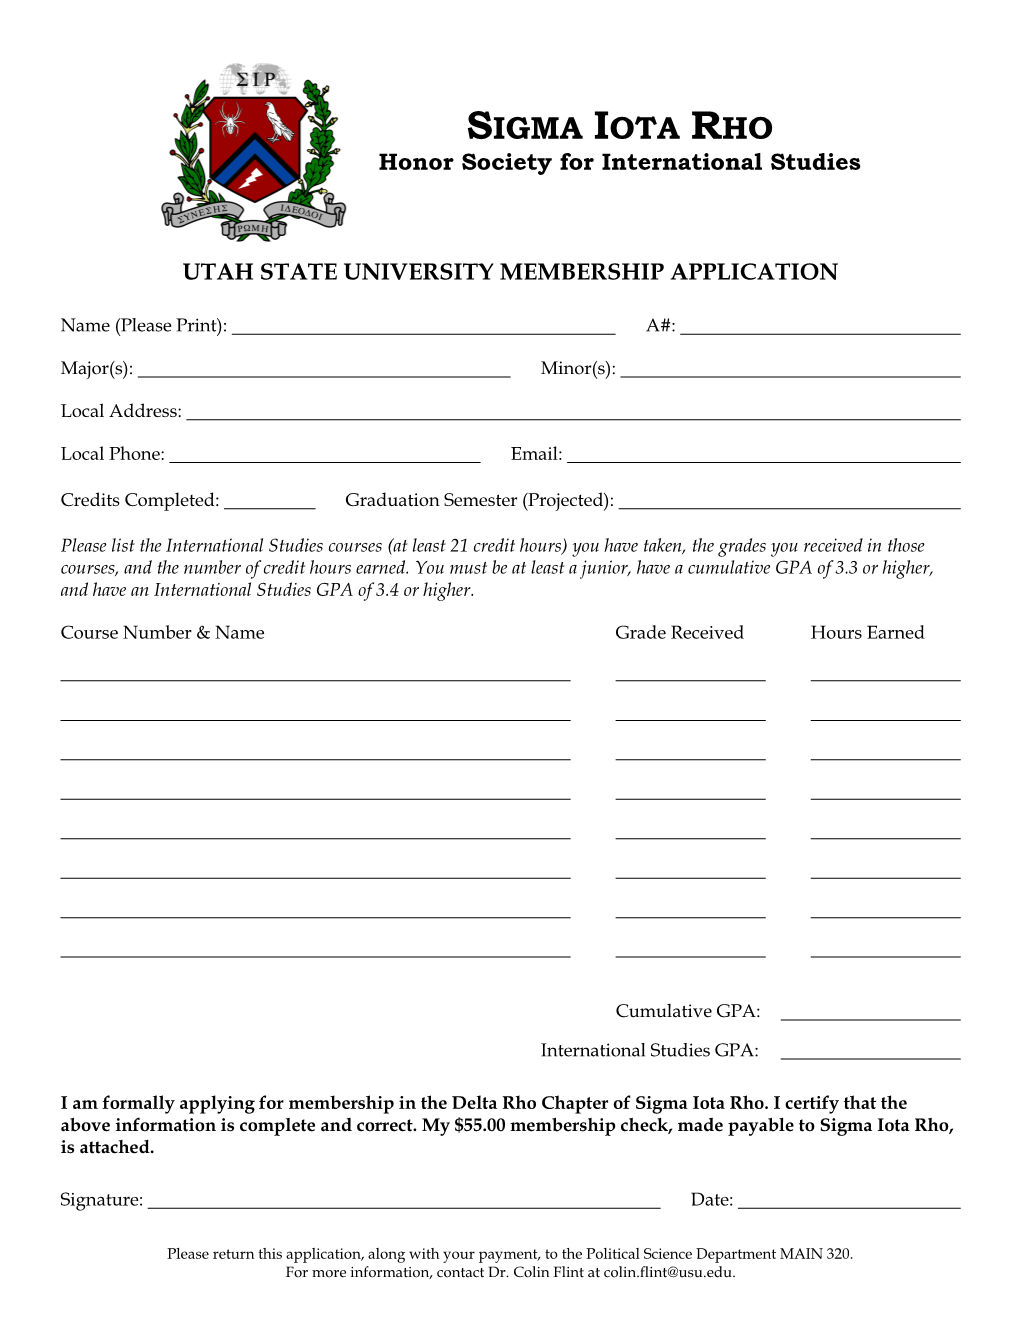 SIGMA IOTA RHO Honor Society for International Studies